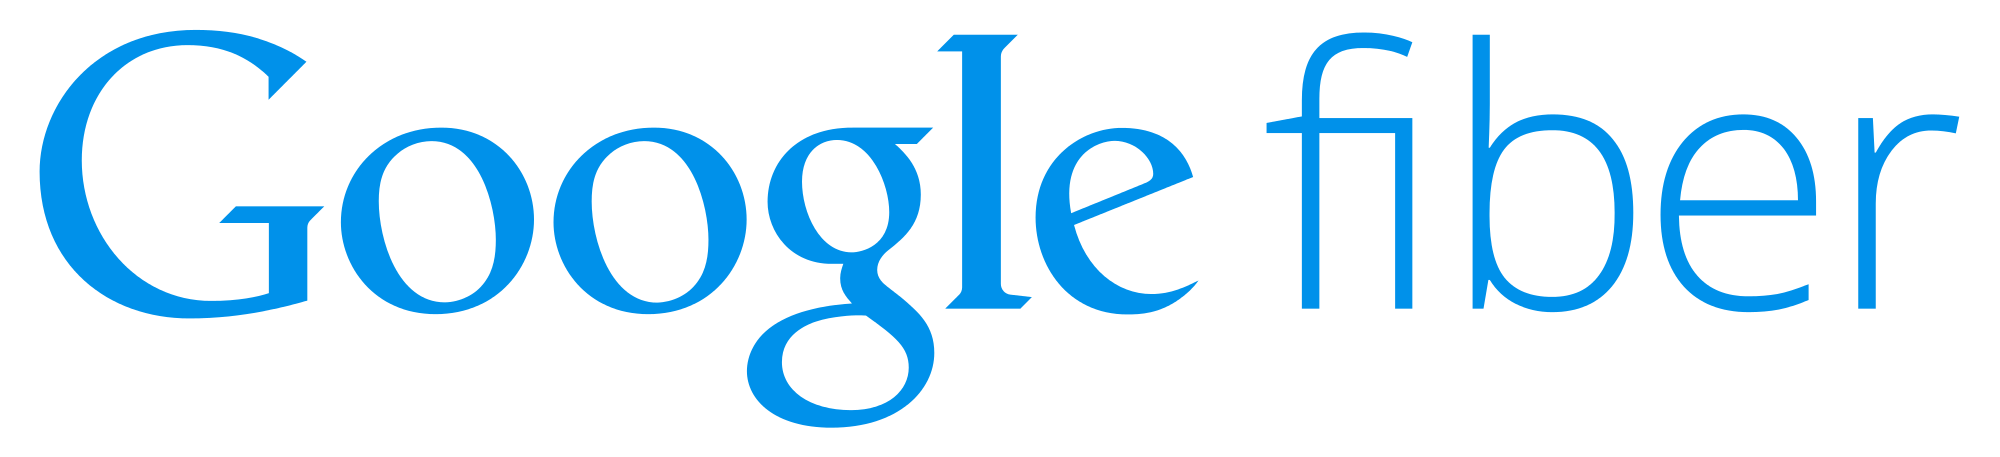 Google_Fiber_logo.png